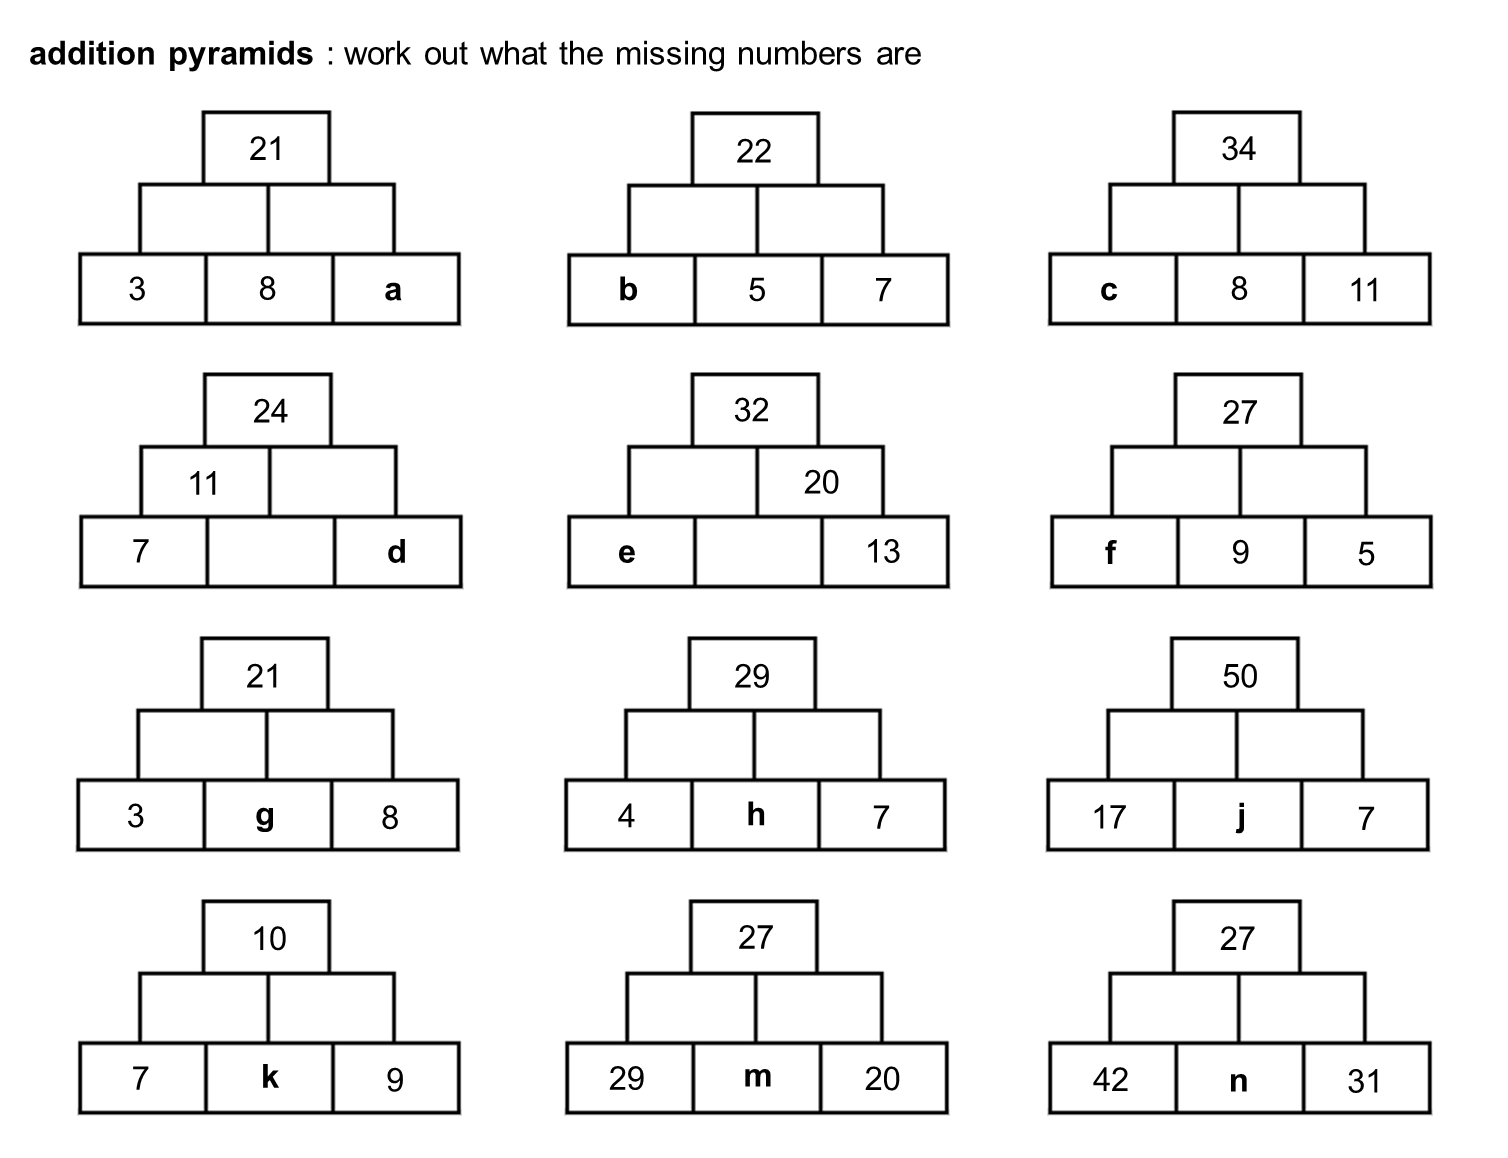 median-don-steward-mathematics-teaching-number-pyramids